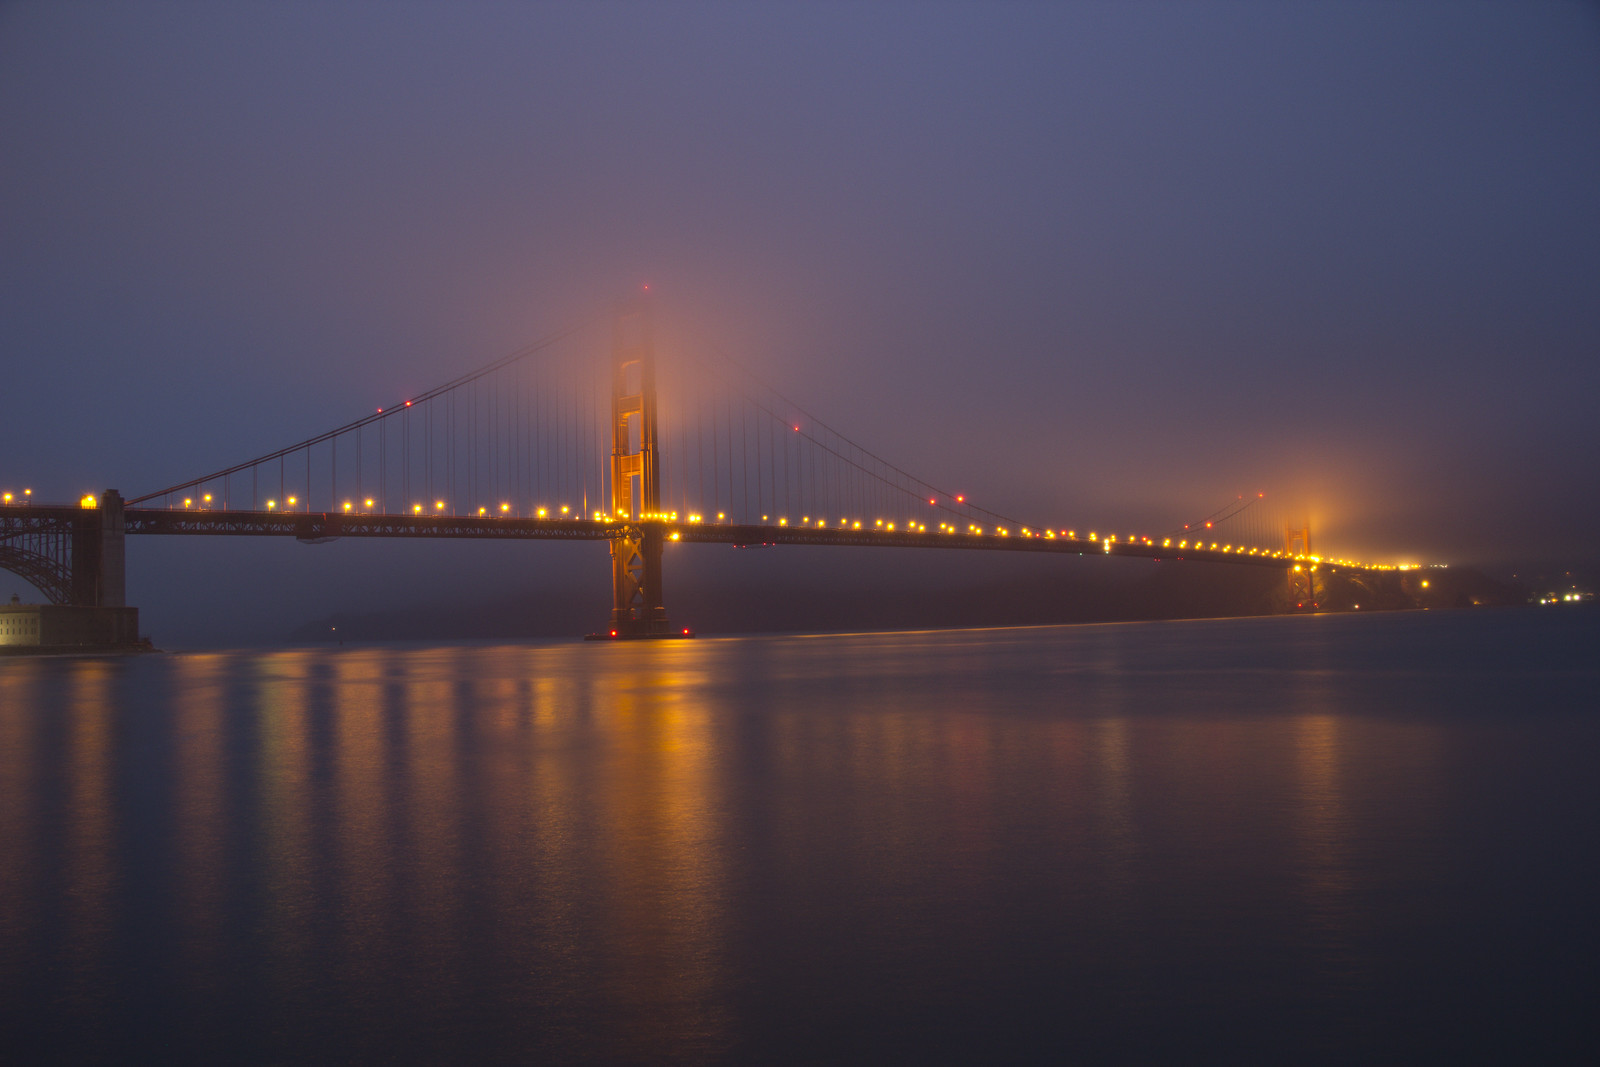 Golden Gate Bridge after the sunset